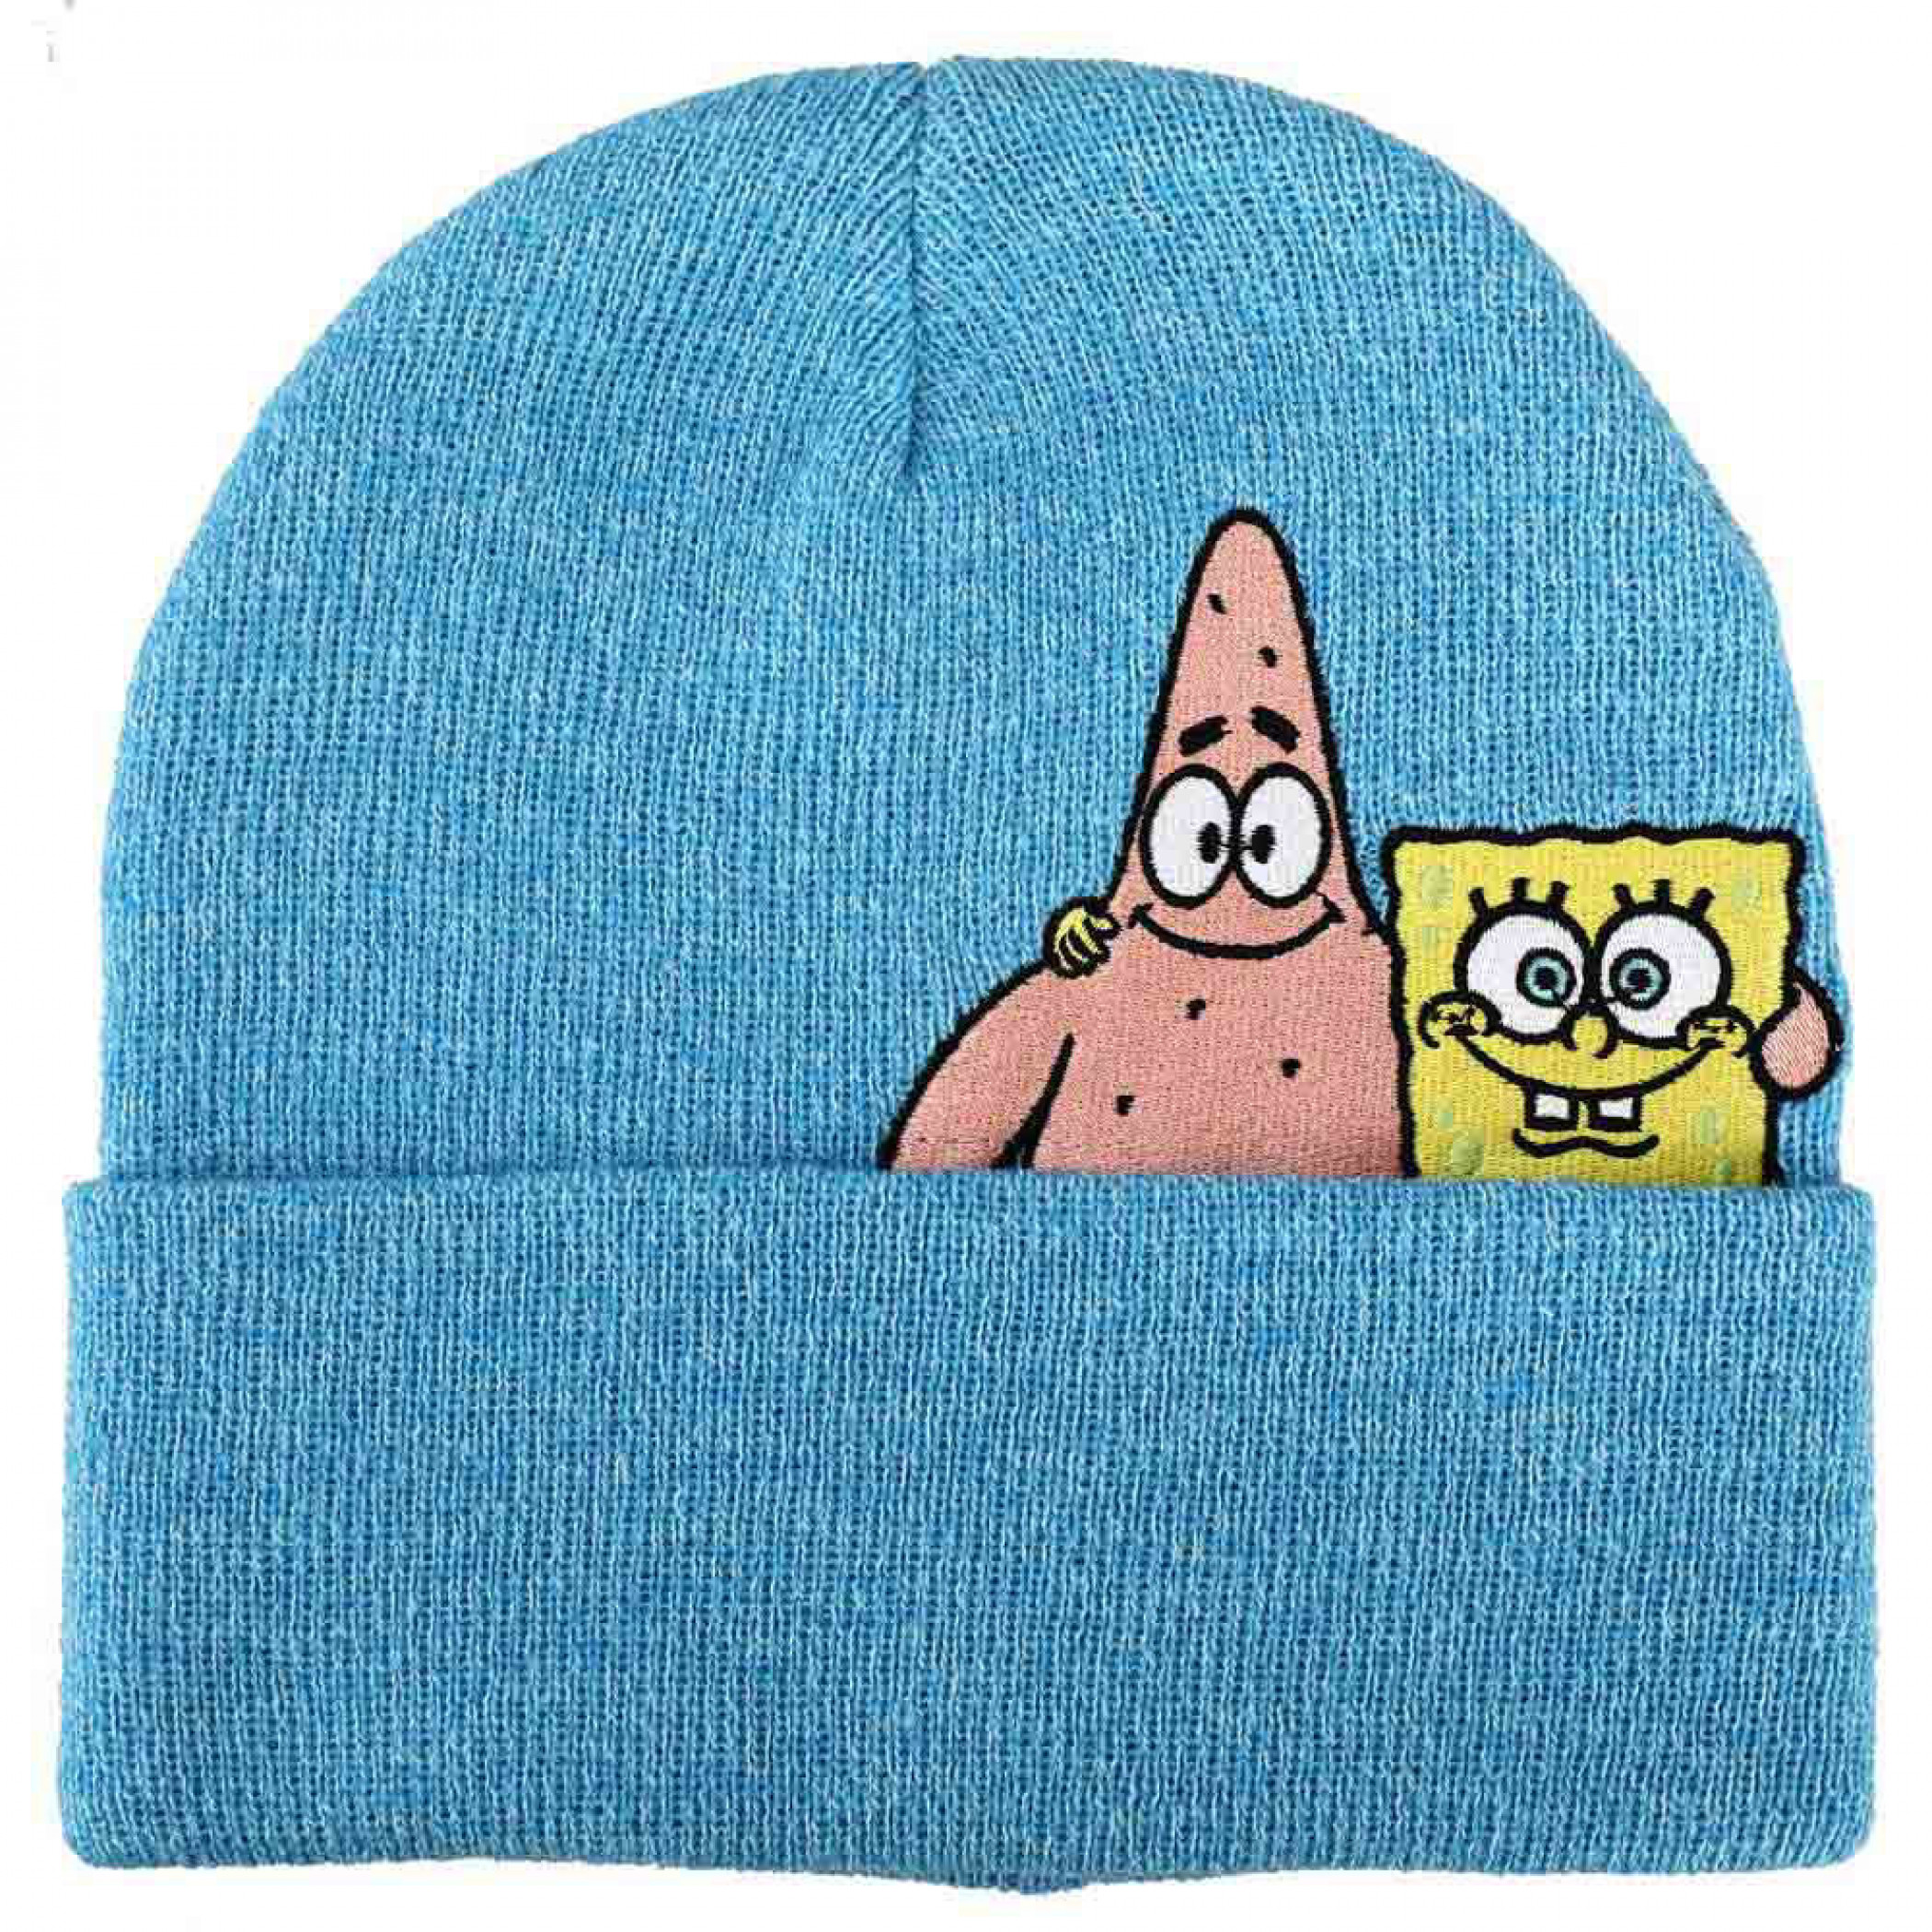 SpongeBob SquarePants & Patrick Star Peek-A-Boo Cuff Beanie